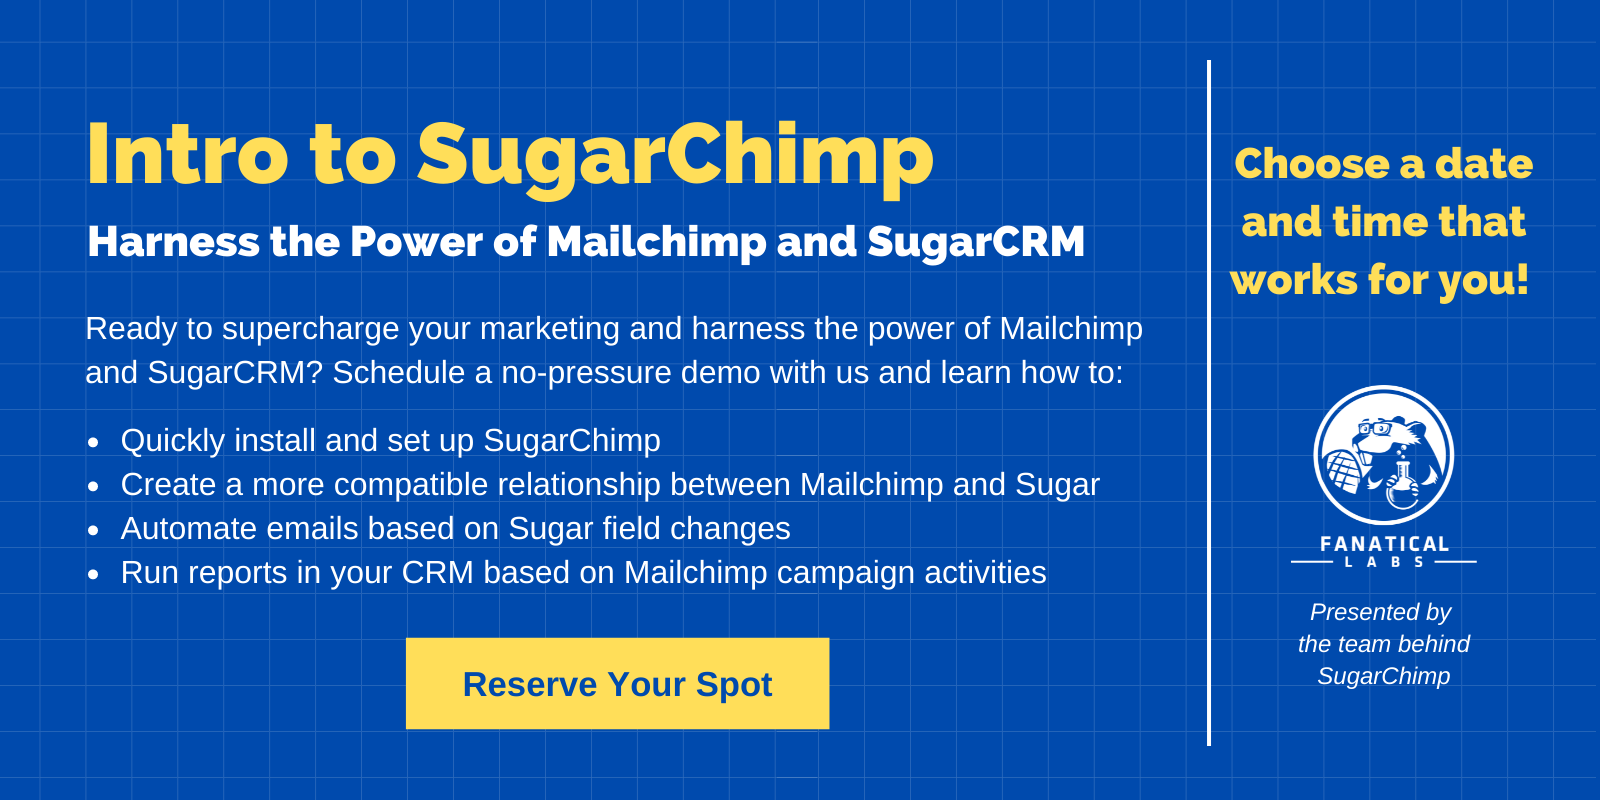 Meeting information for SugarChimp